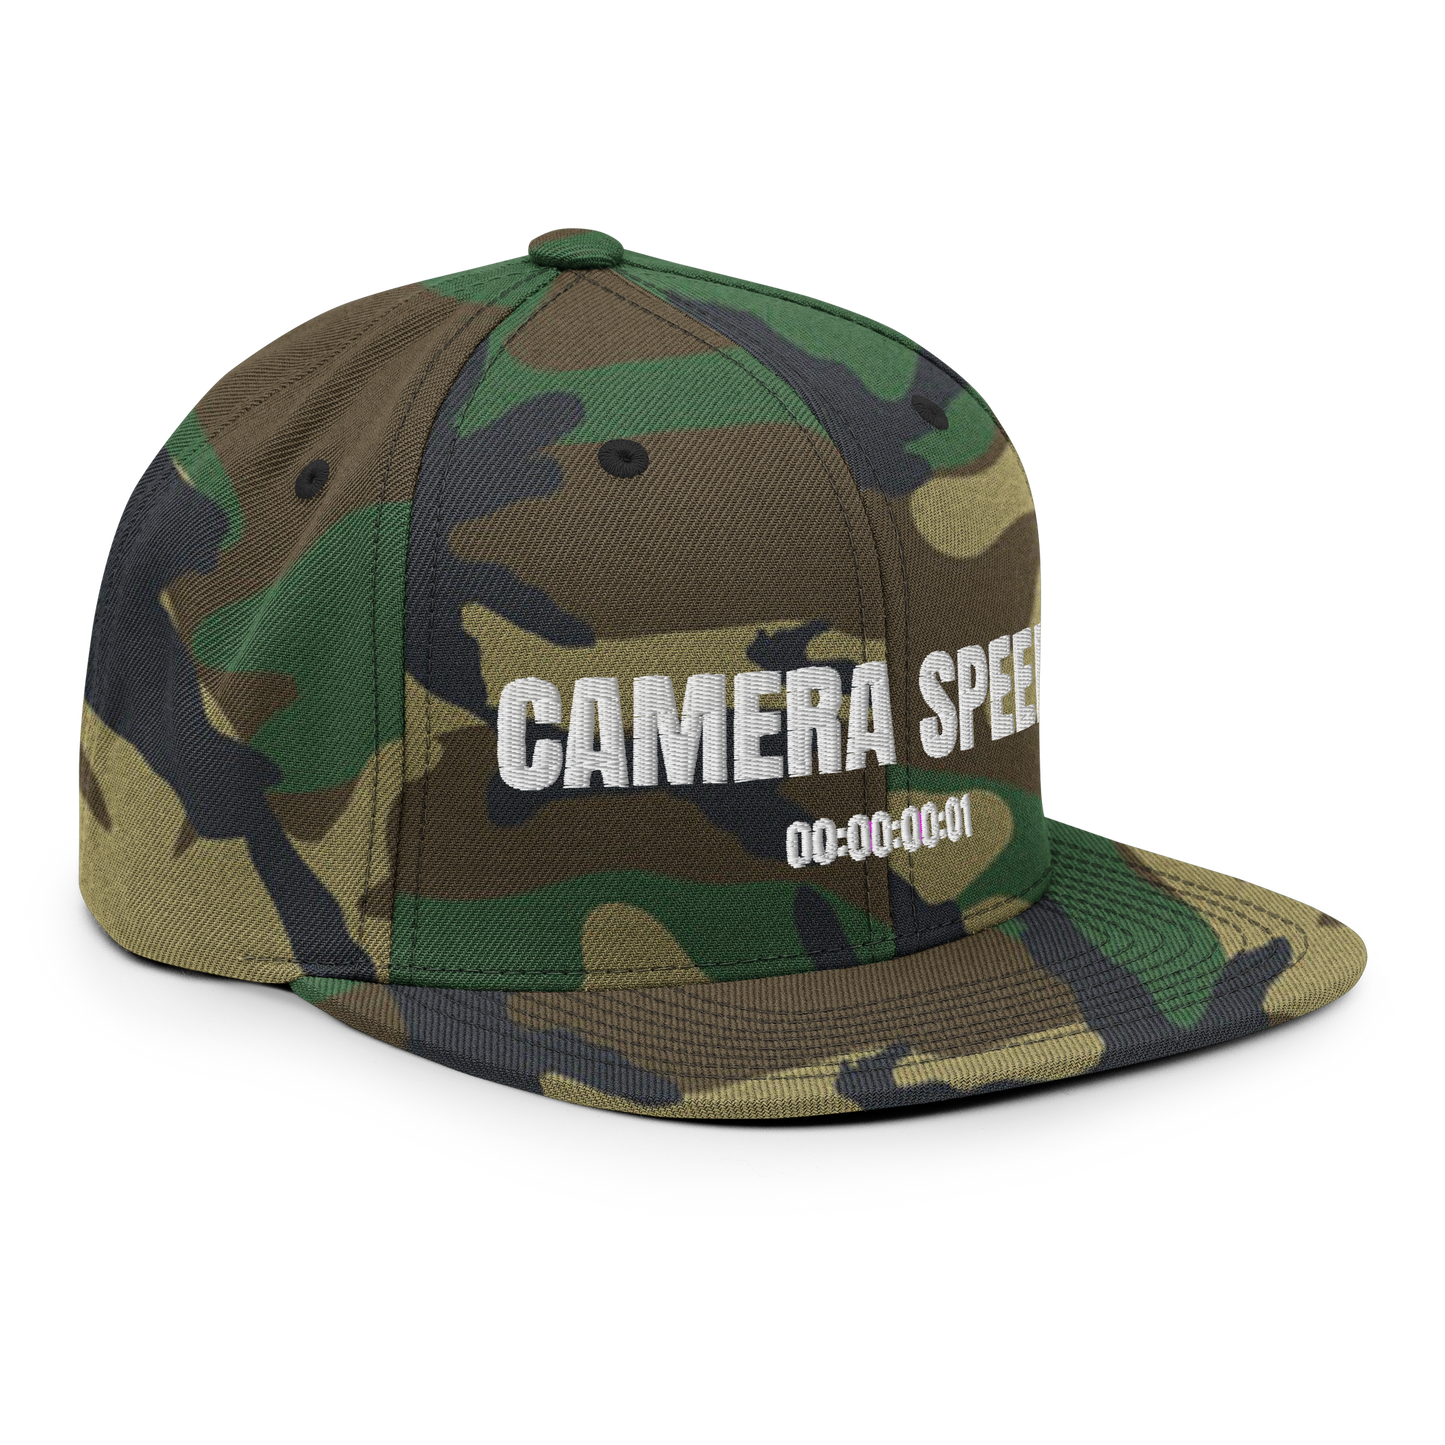 Camera Speeds Snapback Hat